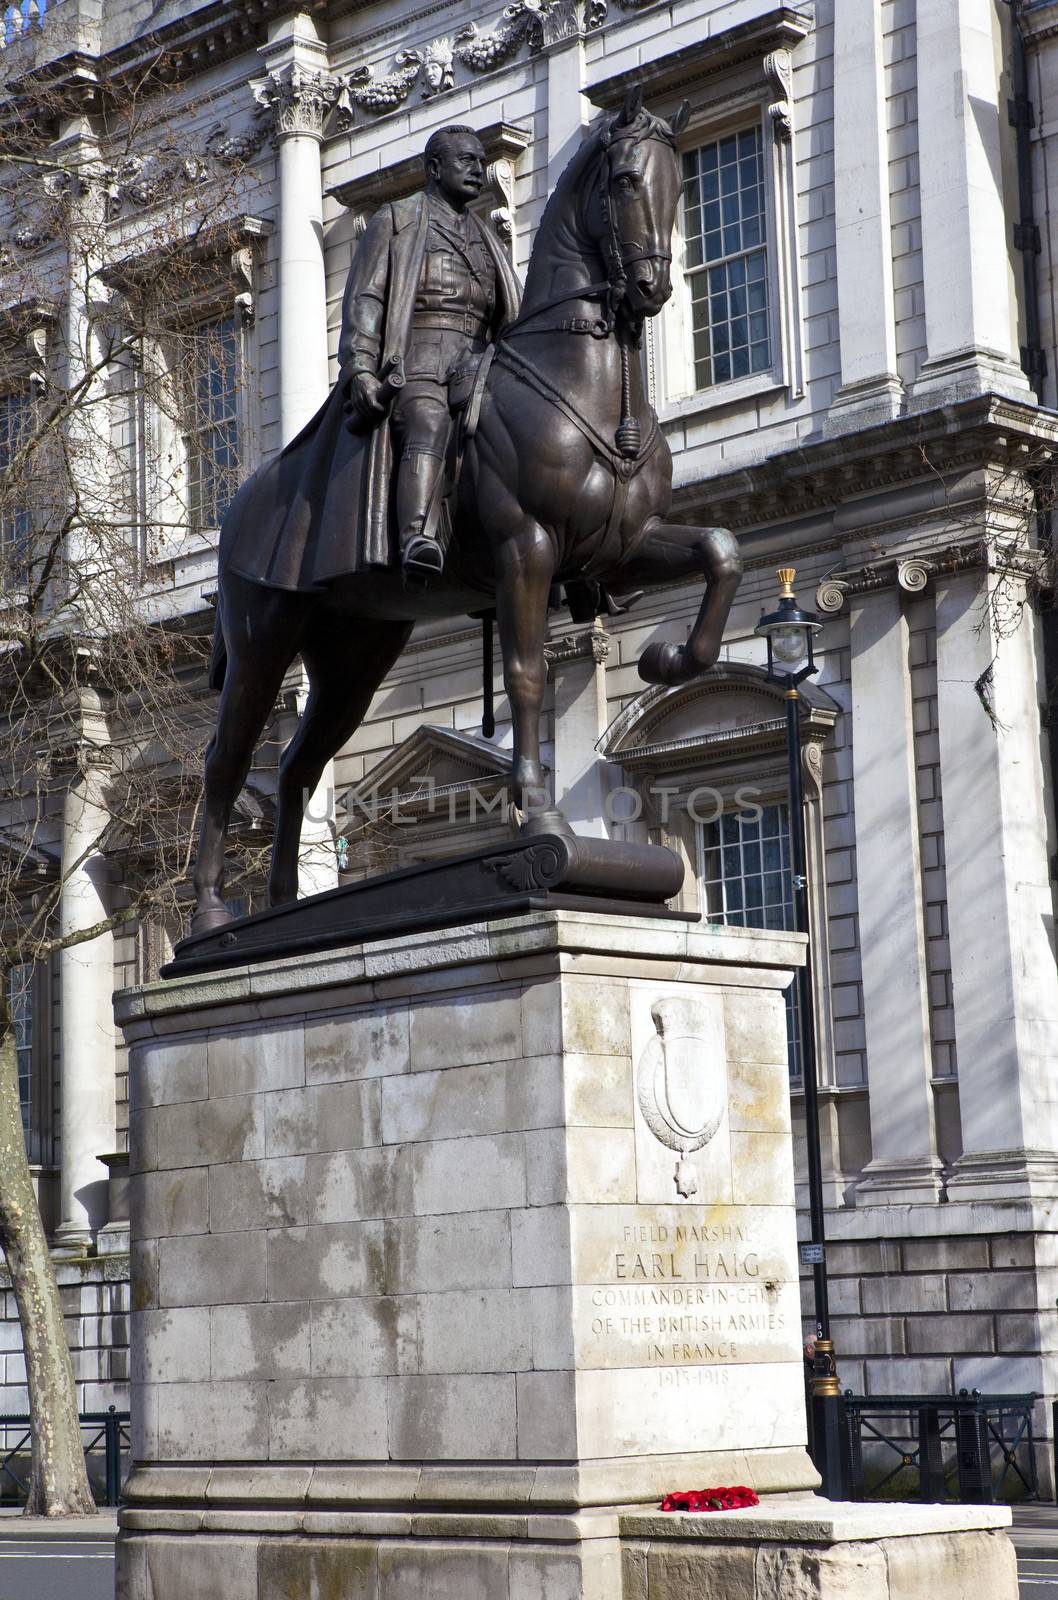 Earl Haig Memorial Statue in London by chrisdorney